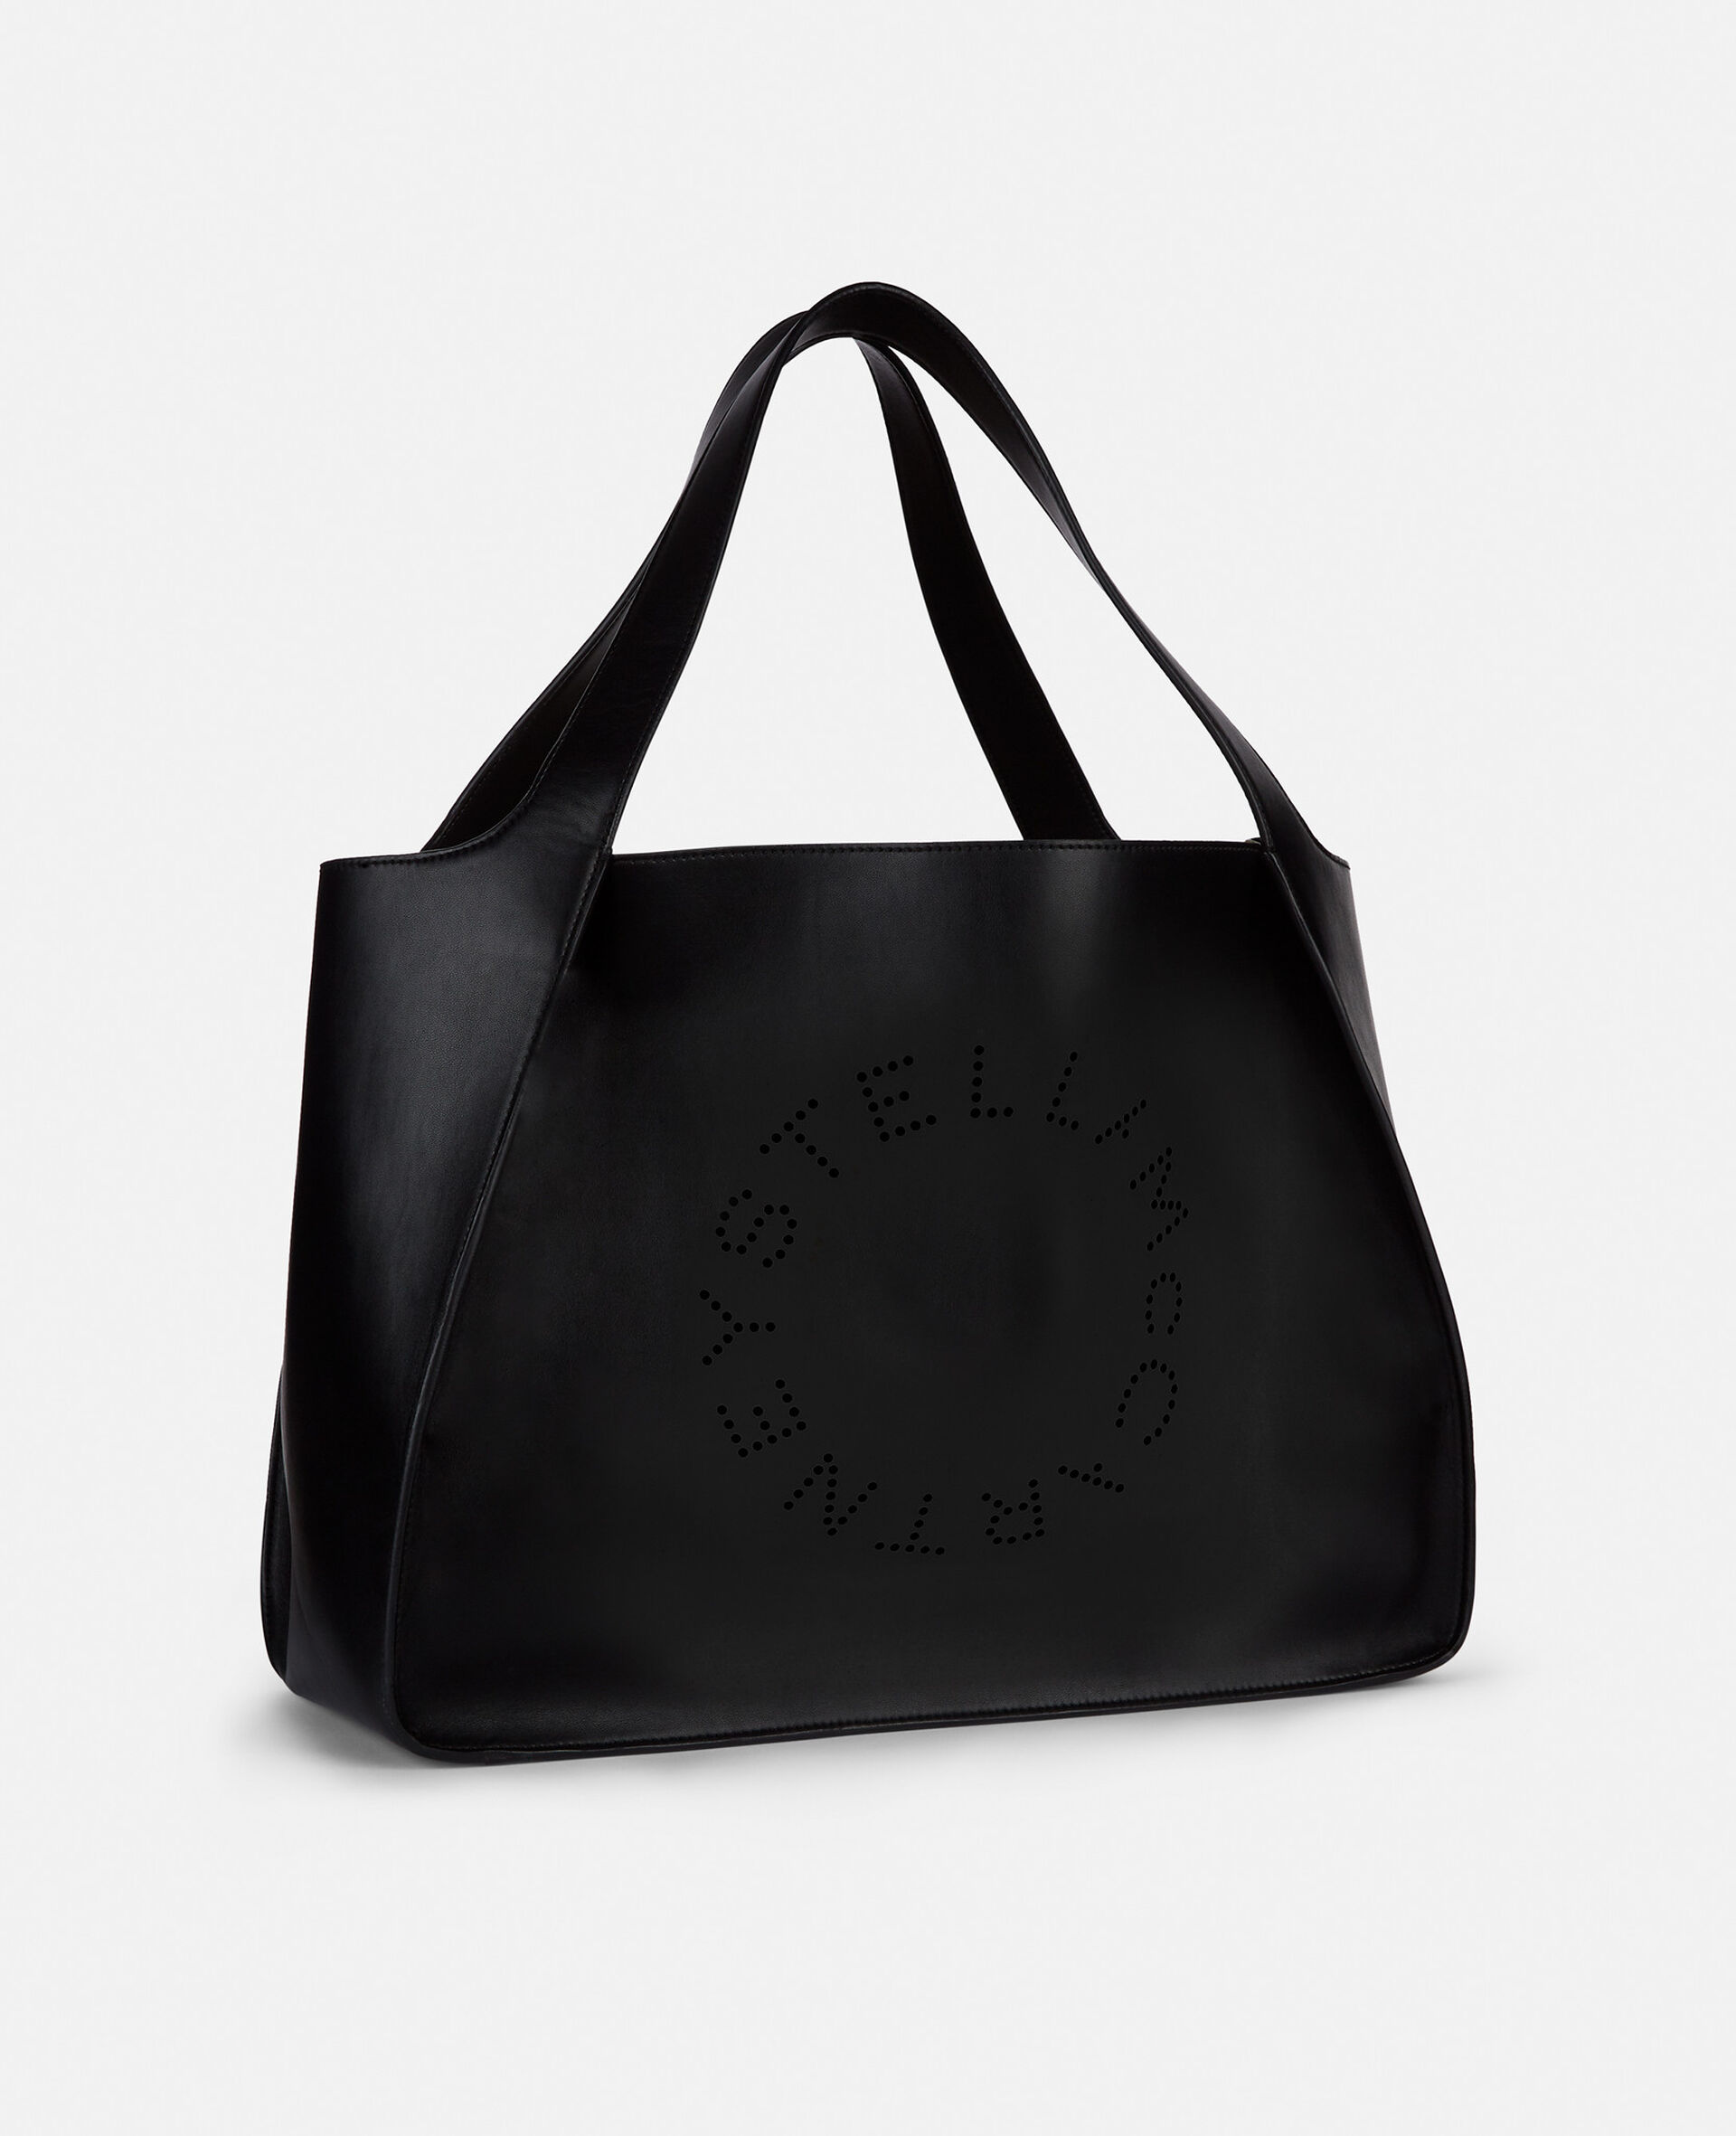 Stella Logo Tote Bag -Black-large image number 1